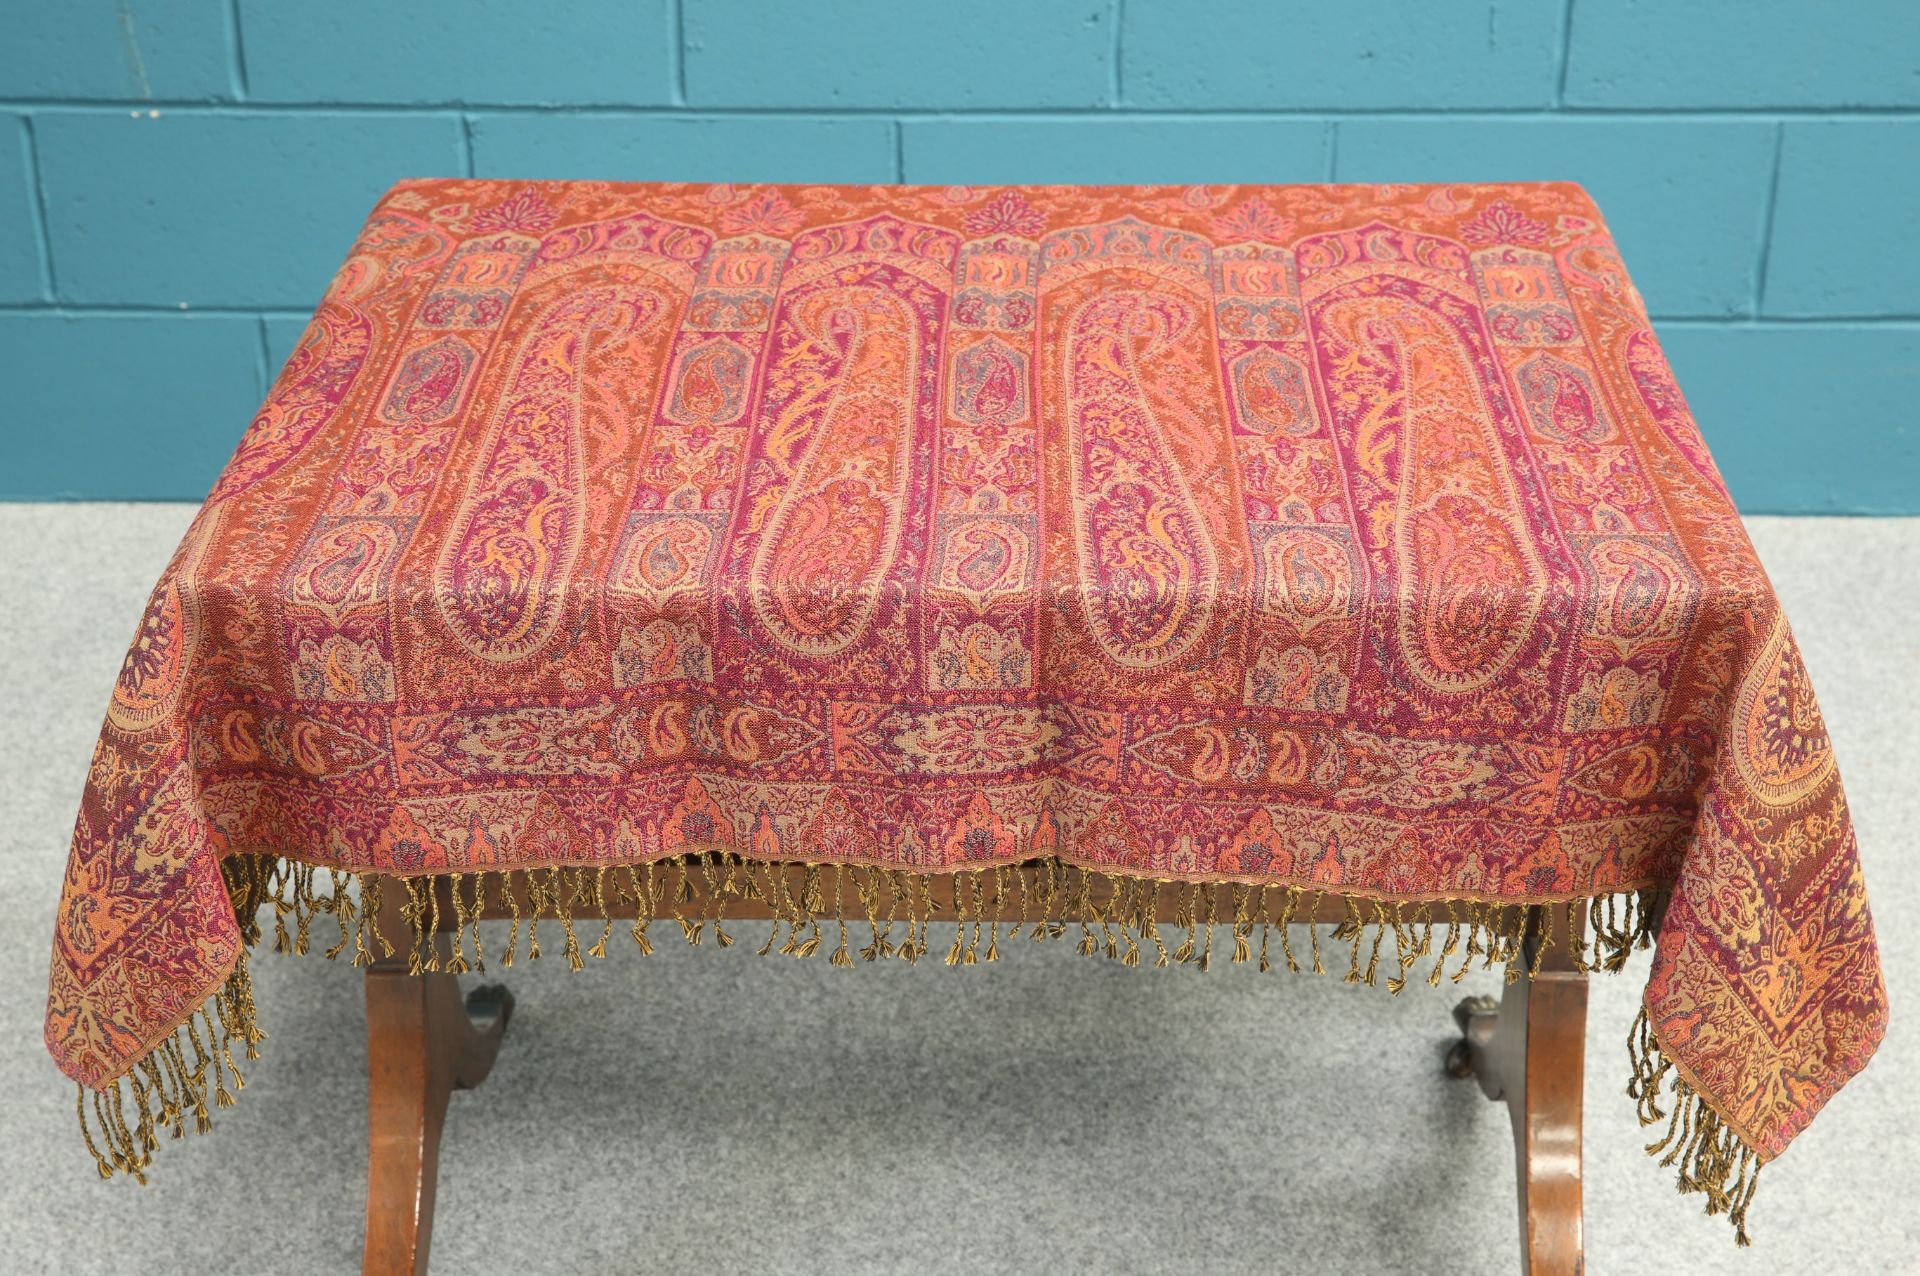 A large Paisley shawl